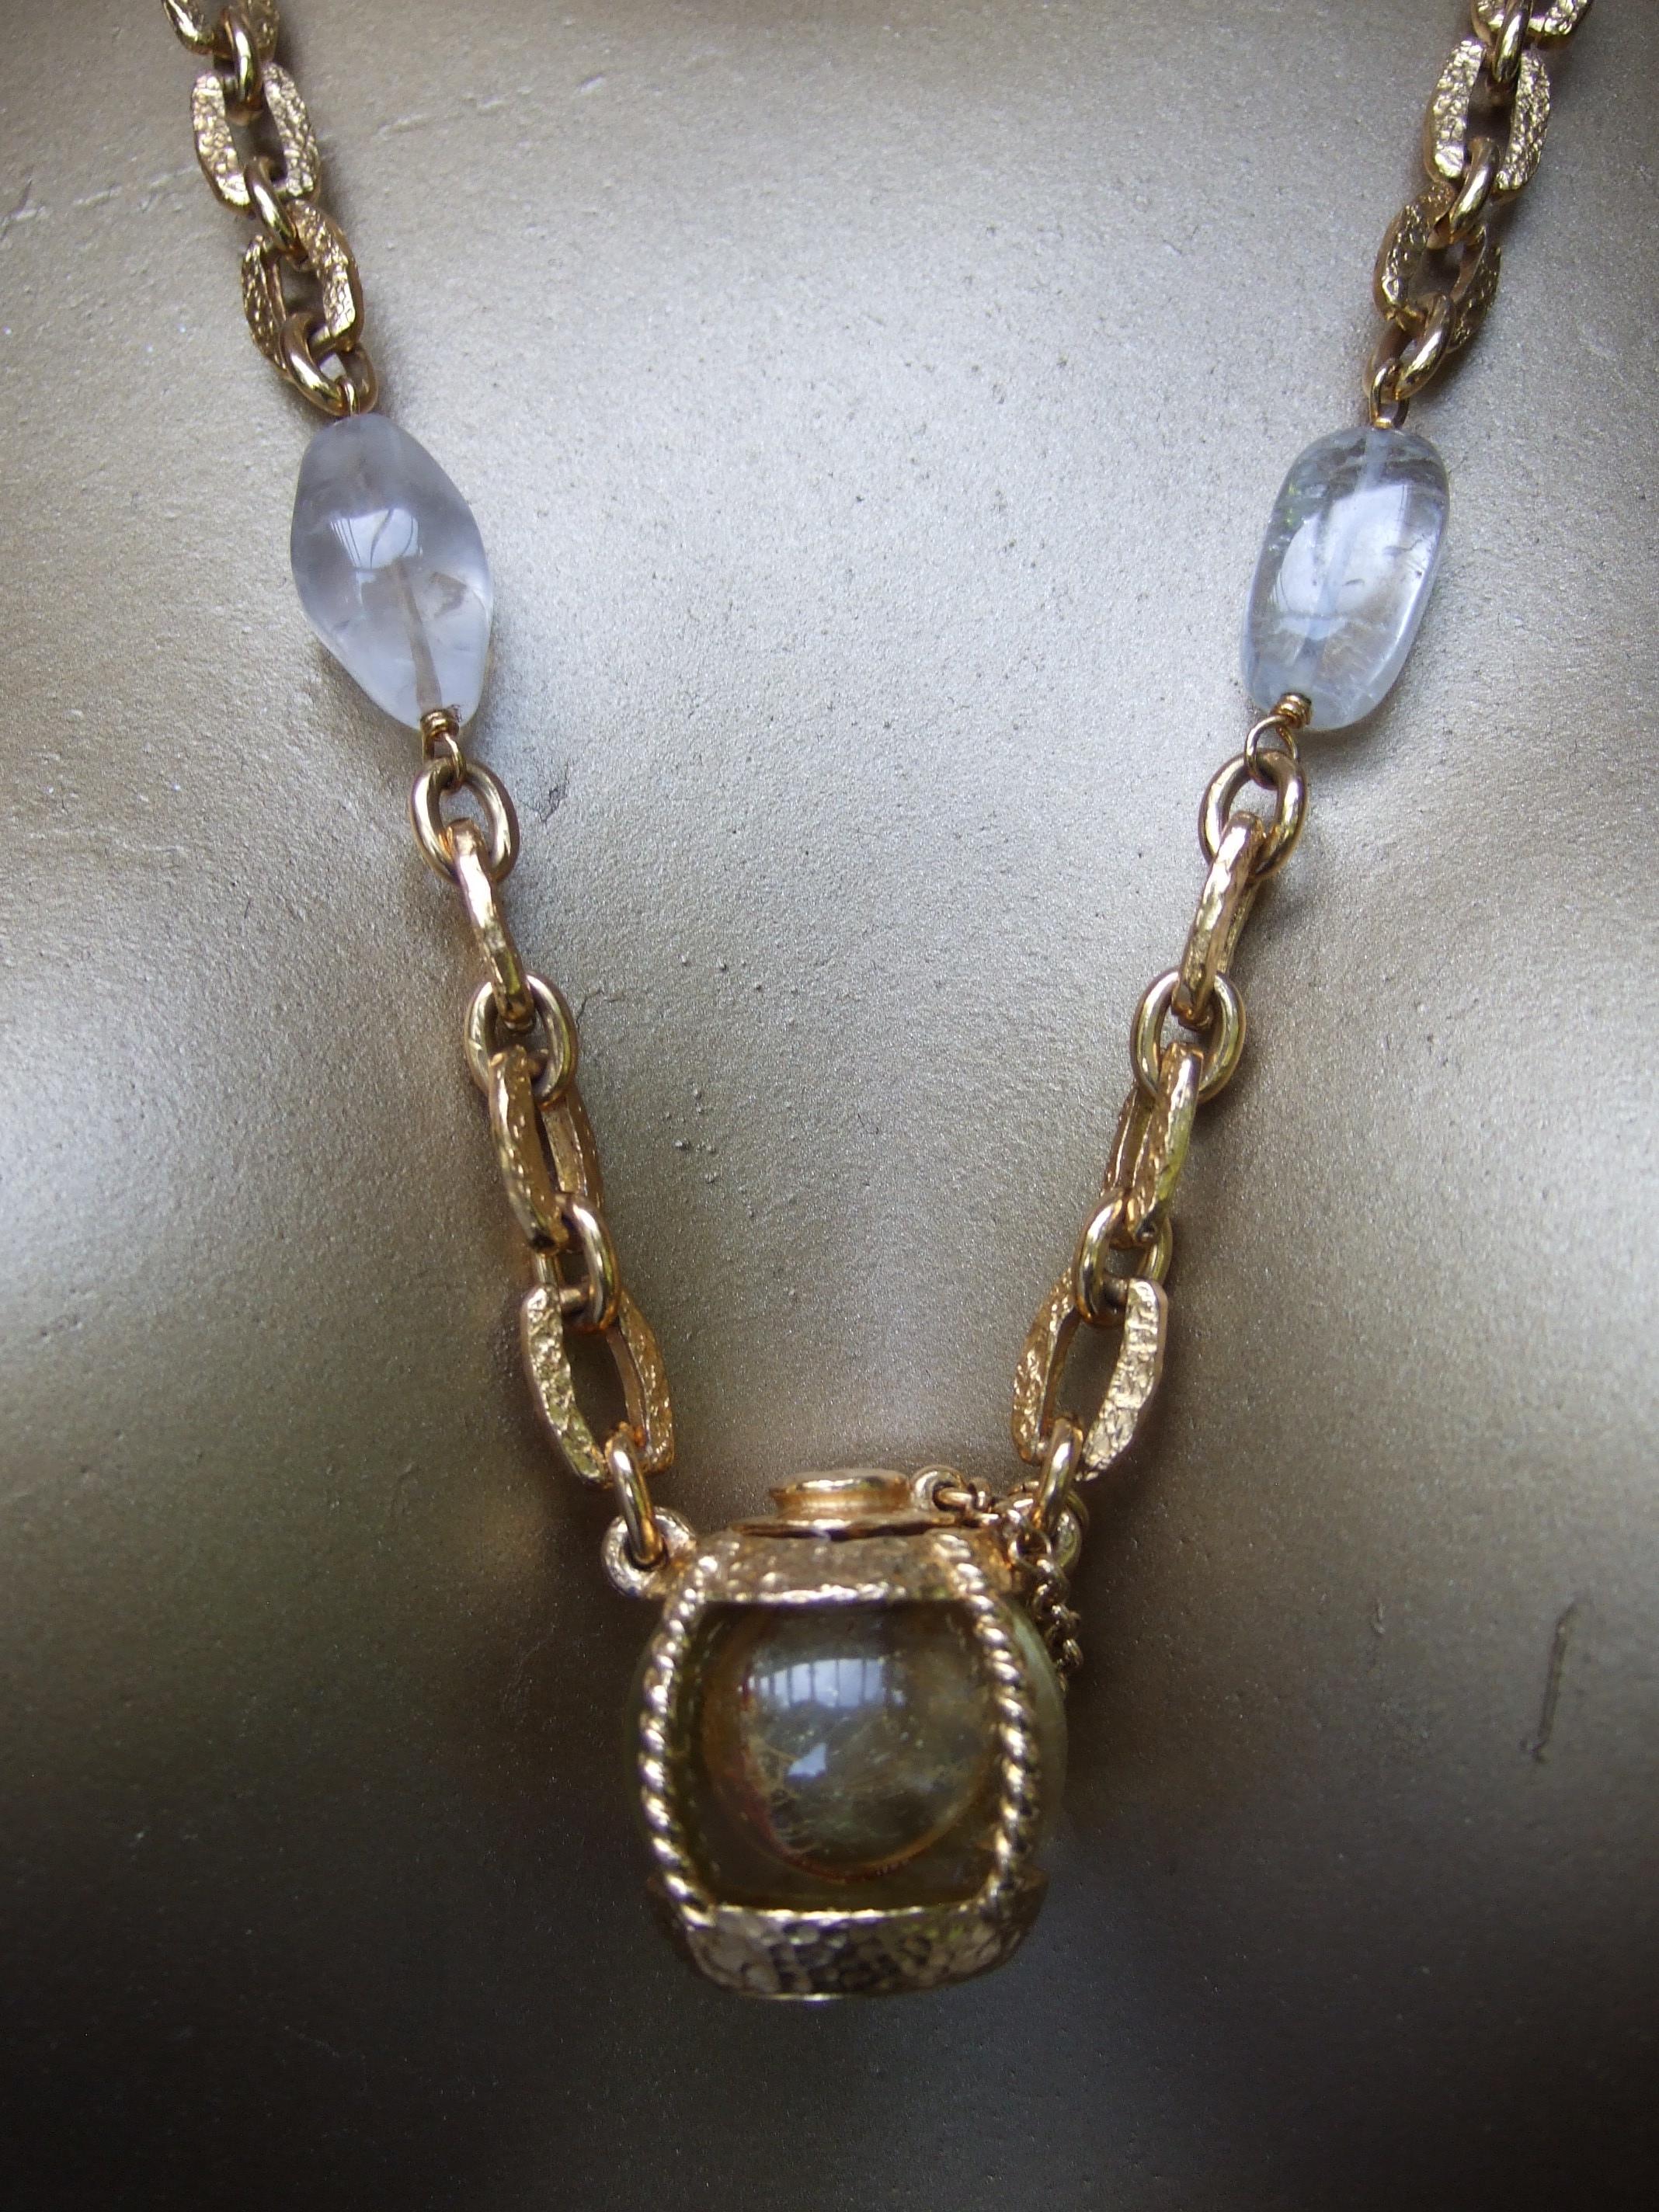 Yves Saint Laurent Rare Crystal Rock Gilt Metal Necklace by Goossens c 1983  For Sale 14